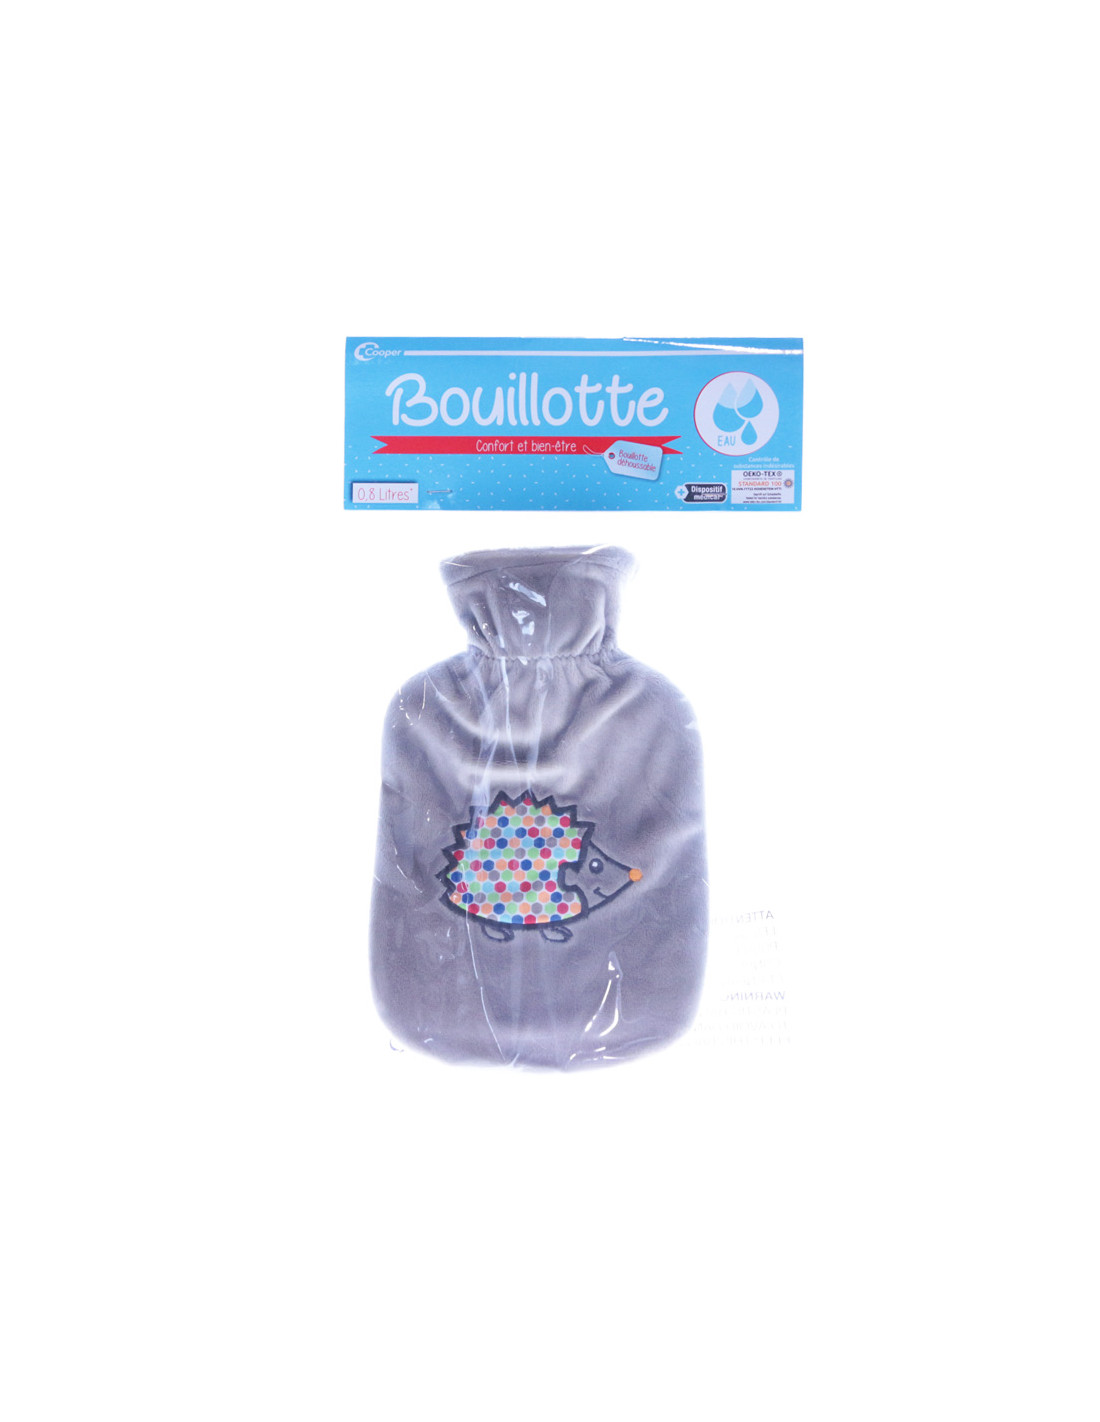 Cooper Bouillotte nue bleu - 2L - Pharmacie en ligne